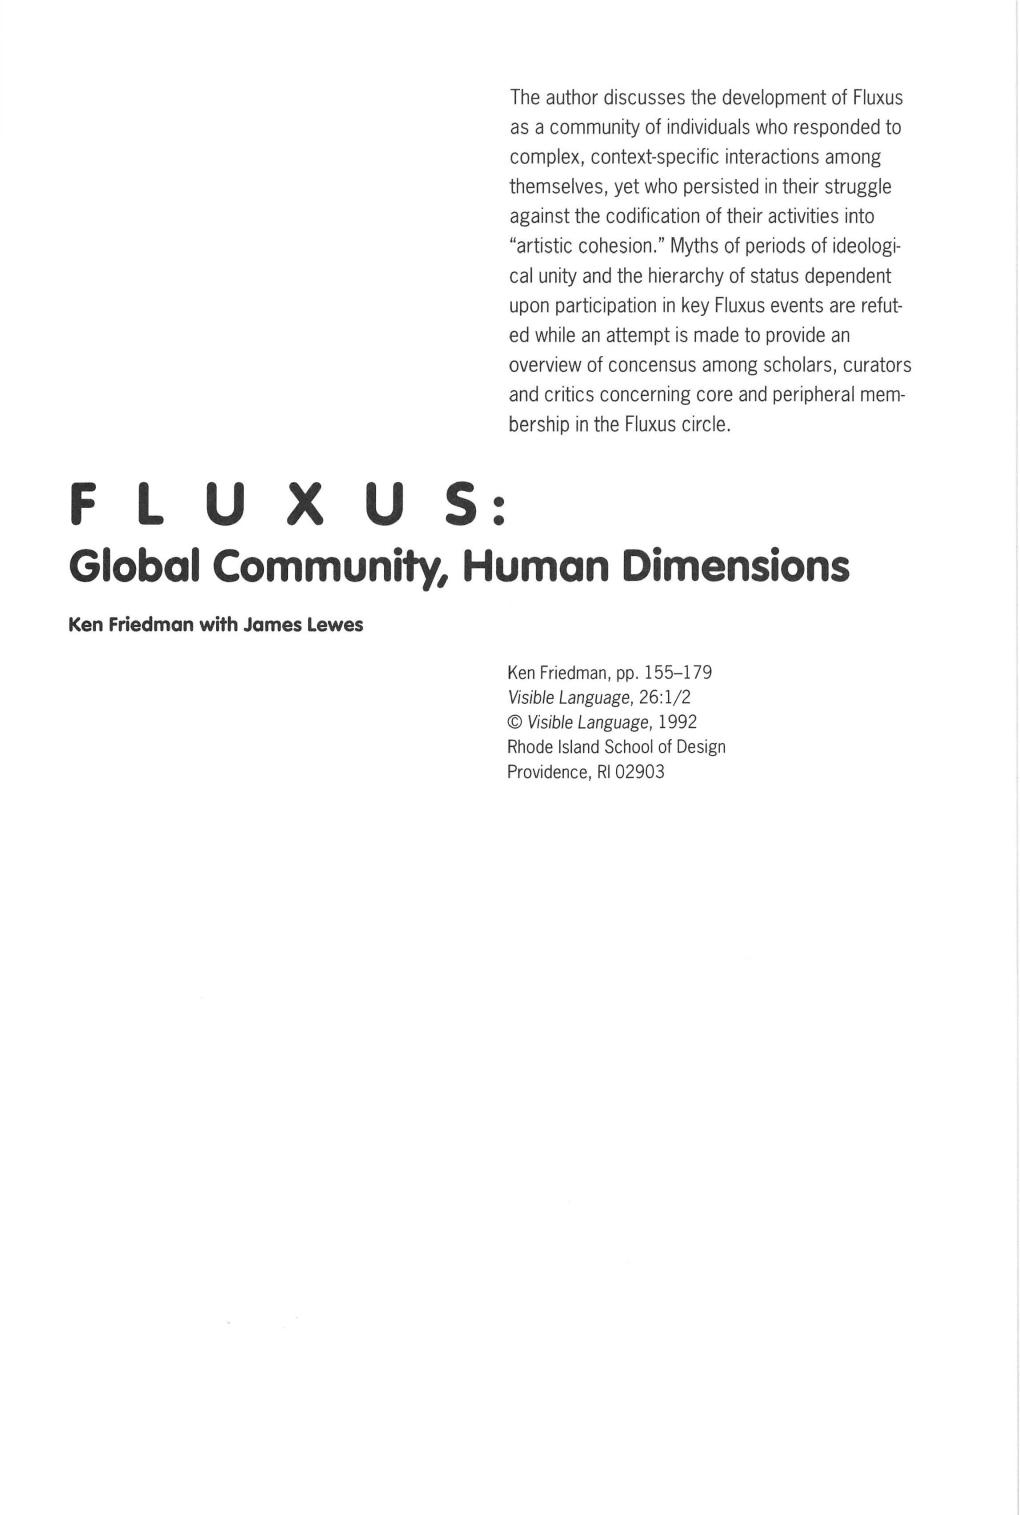 Global Community, Human Dimensions